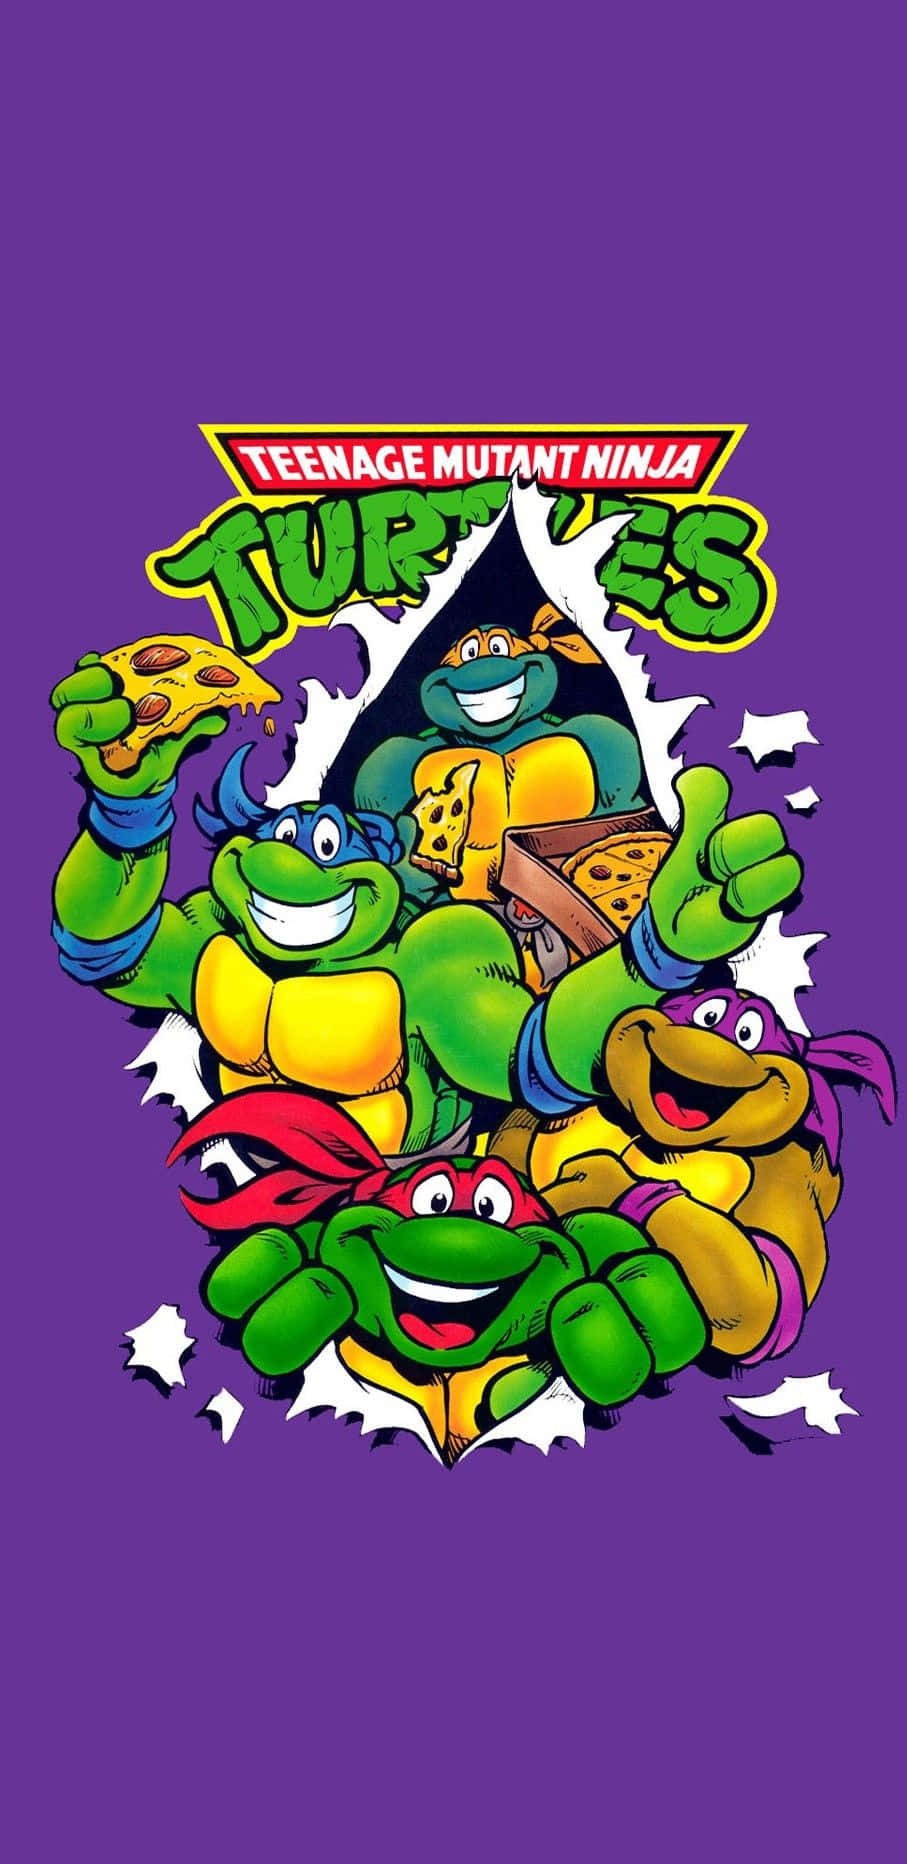 Teenage Mutant Ninja Turtles Comic Book With Pizza Slices Wallpaper